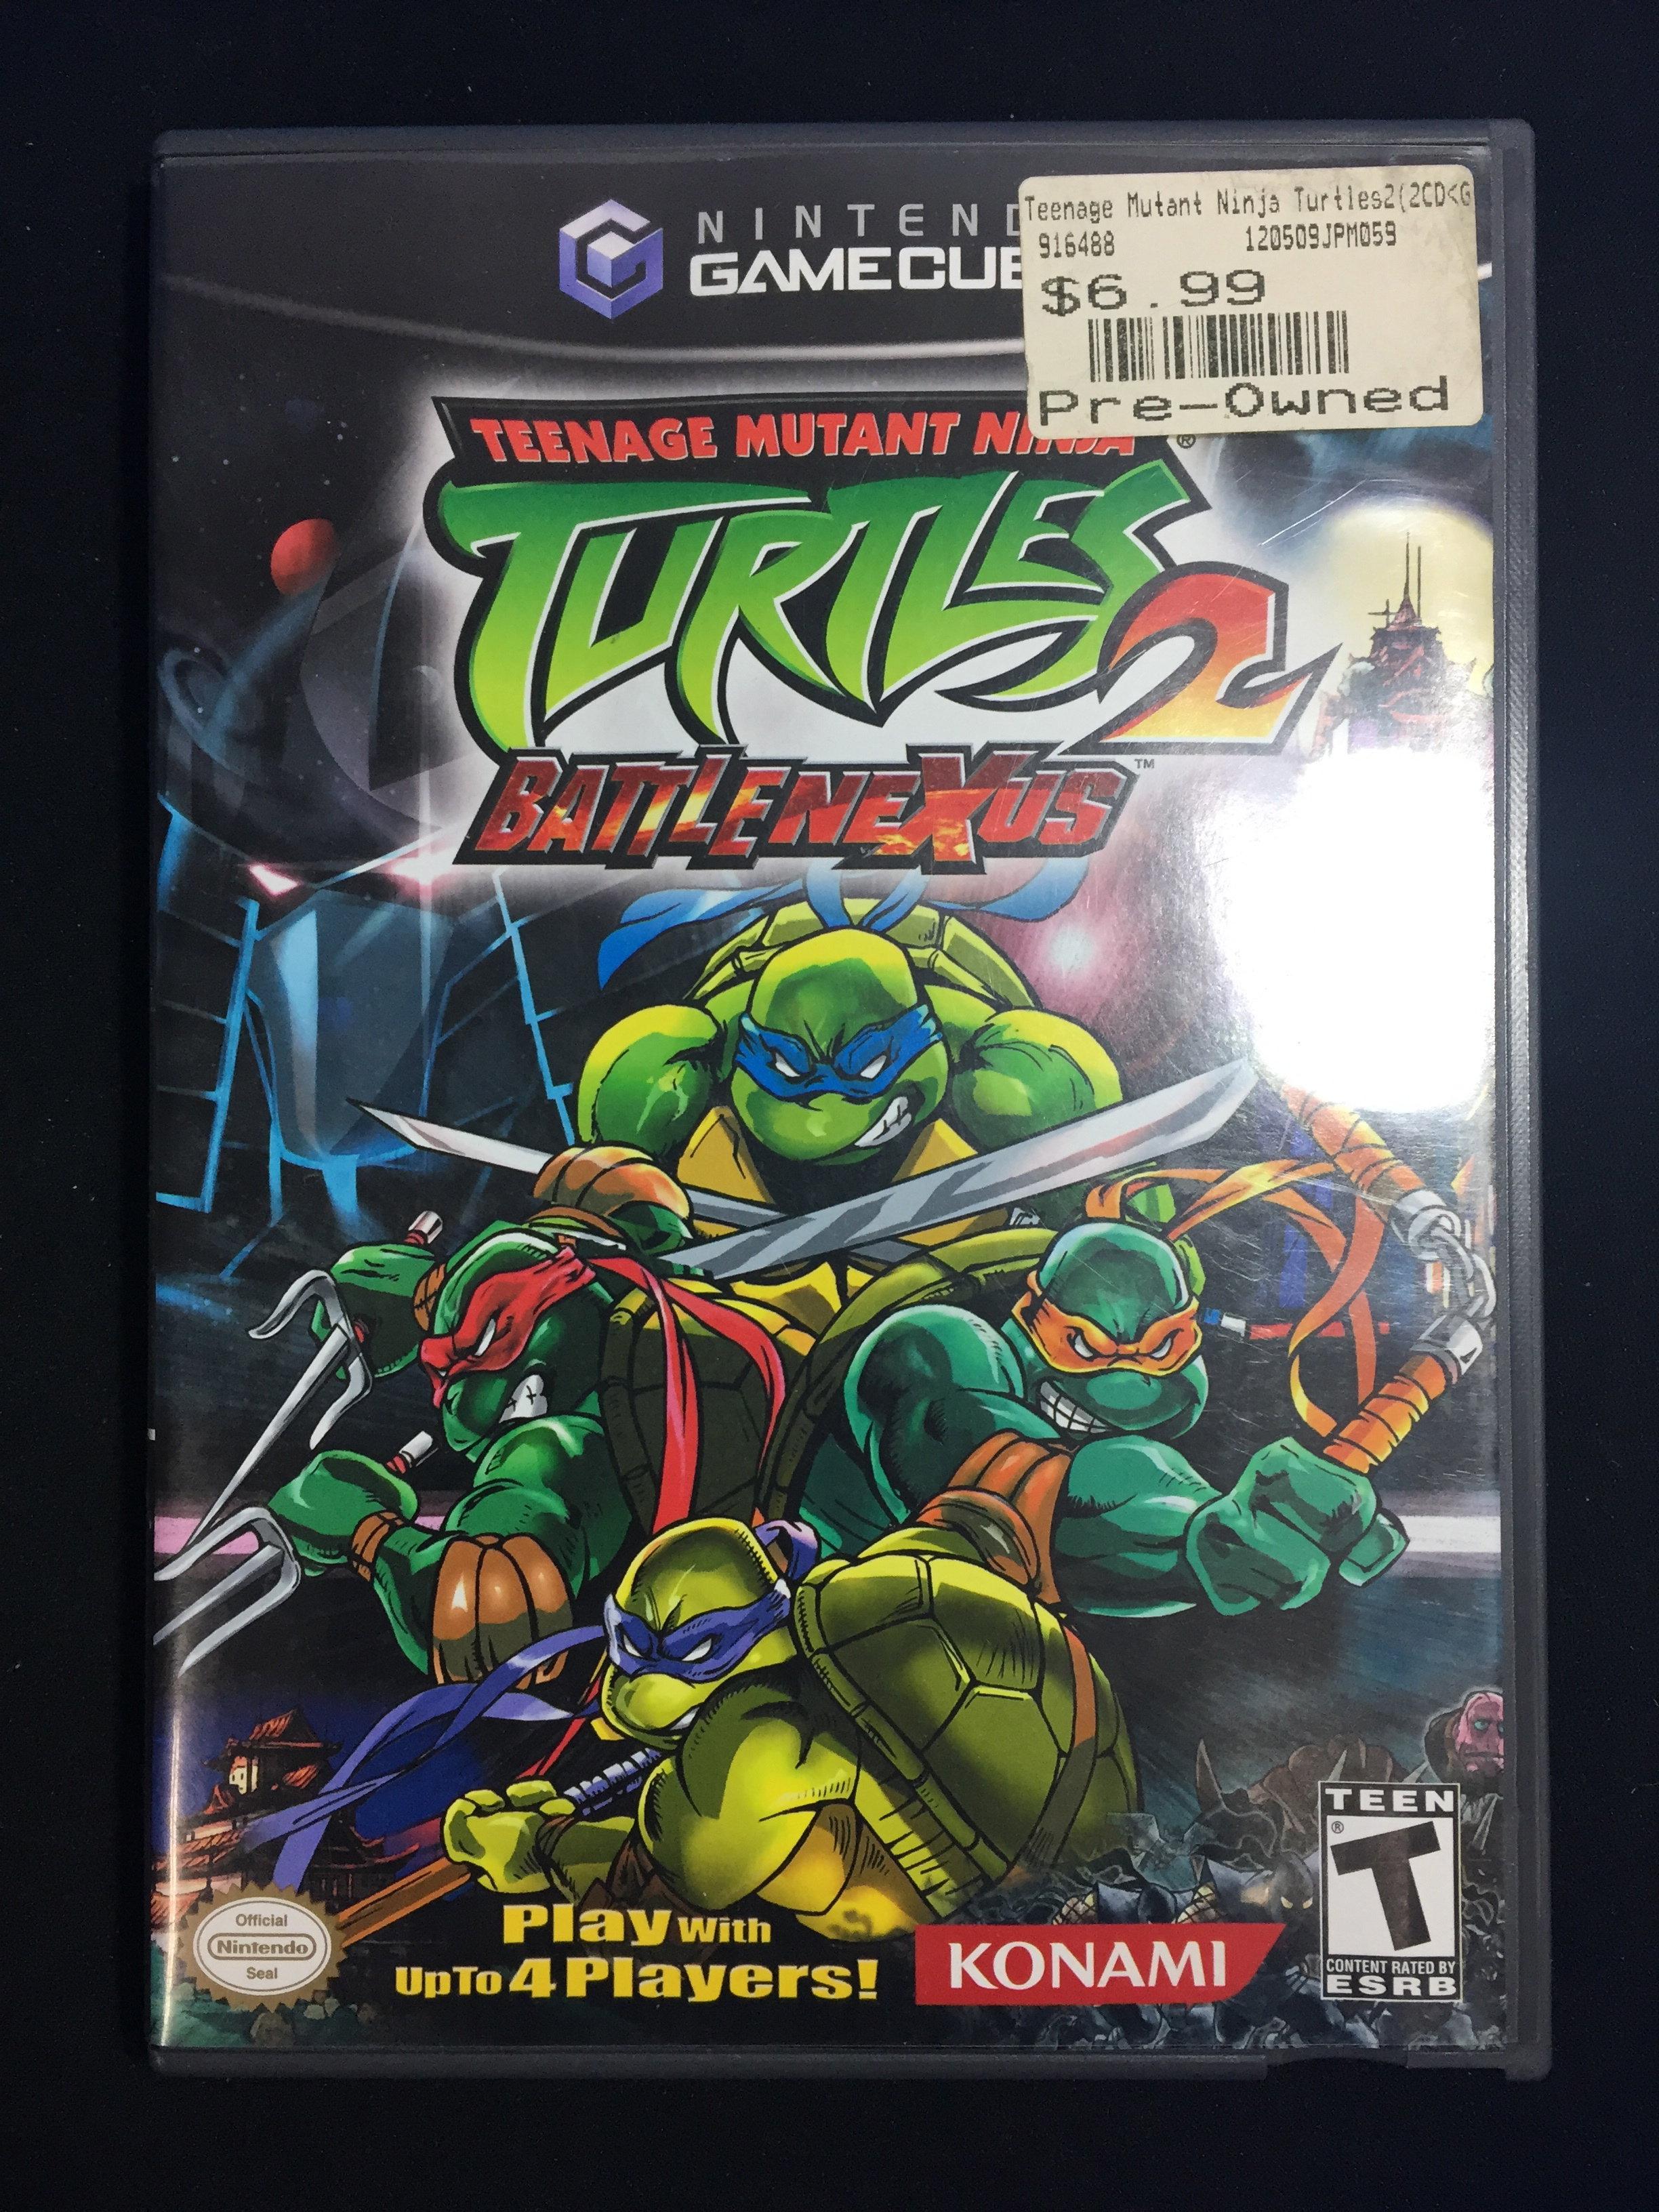 Nintendo Gamecube Teenage Mutant Ninja Turtles 2 Battle Nexus Video Game